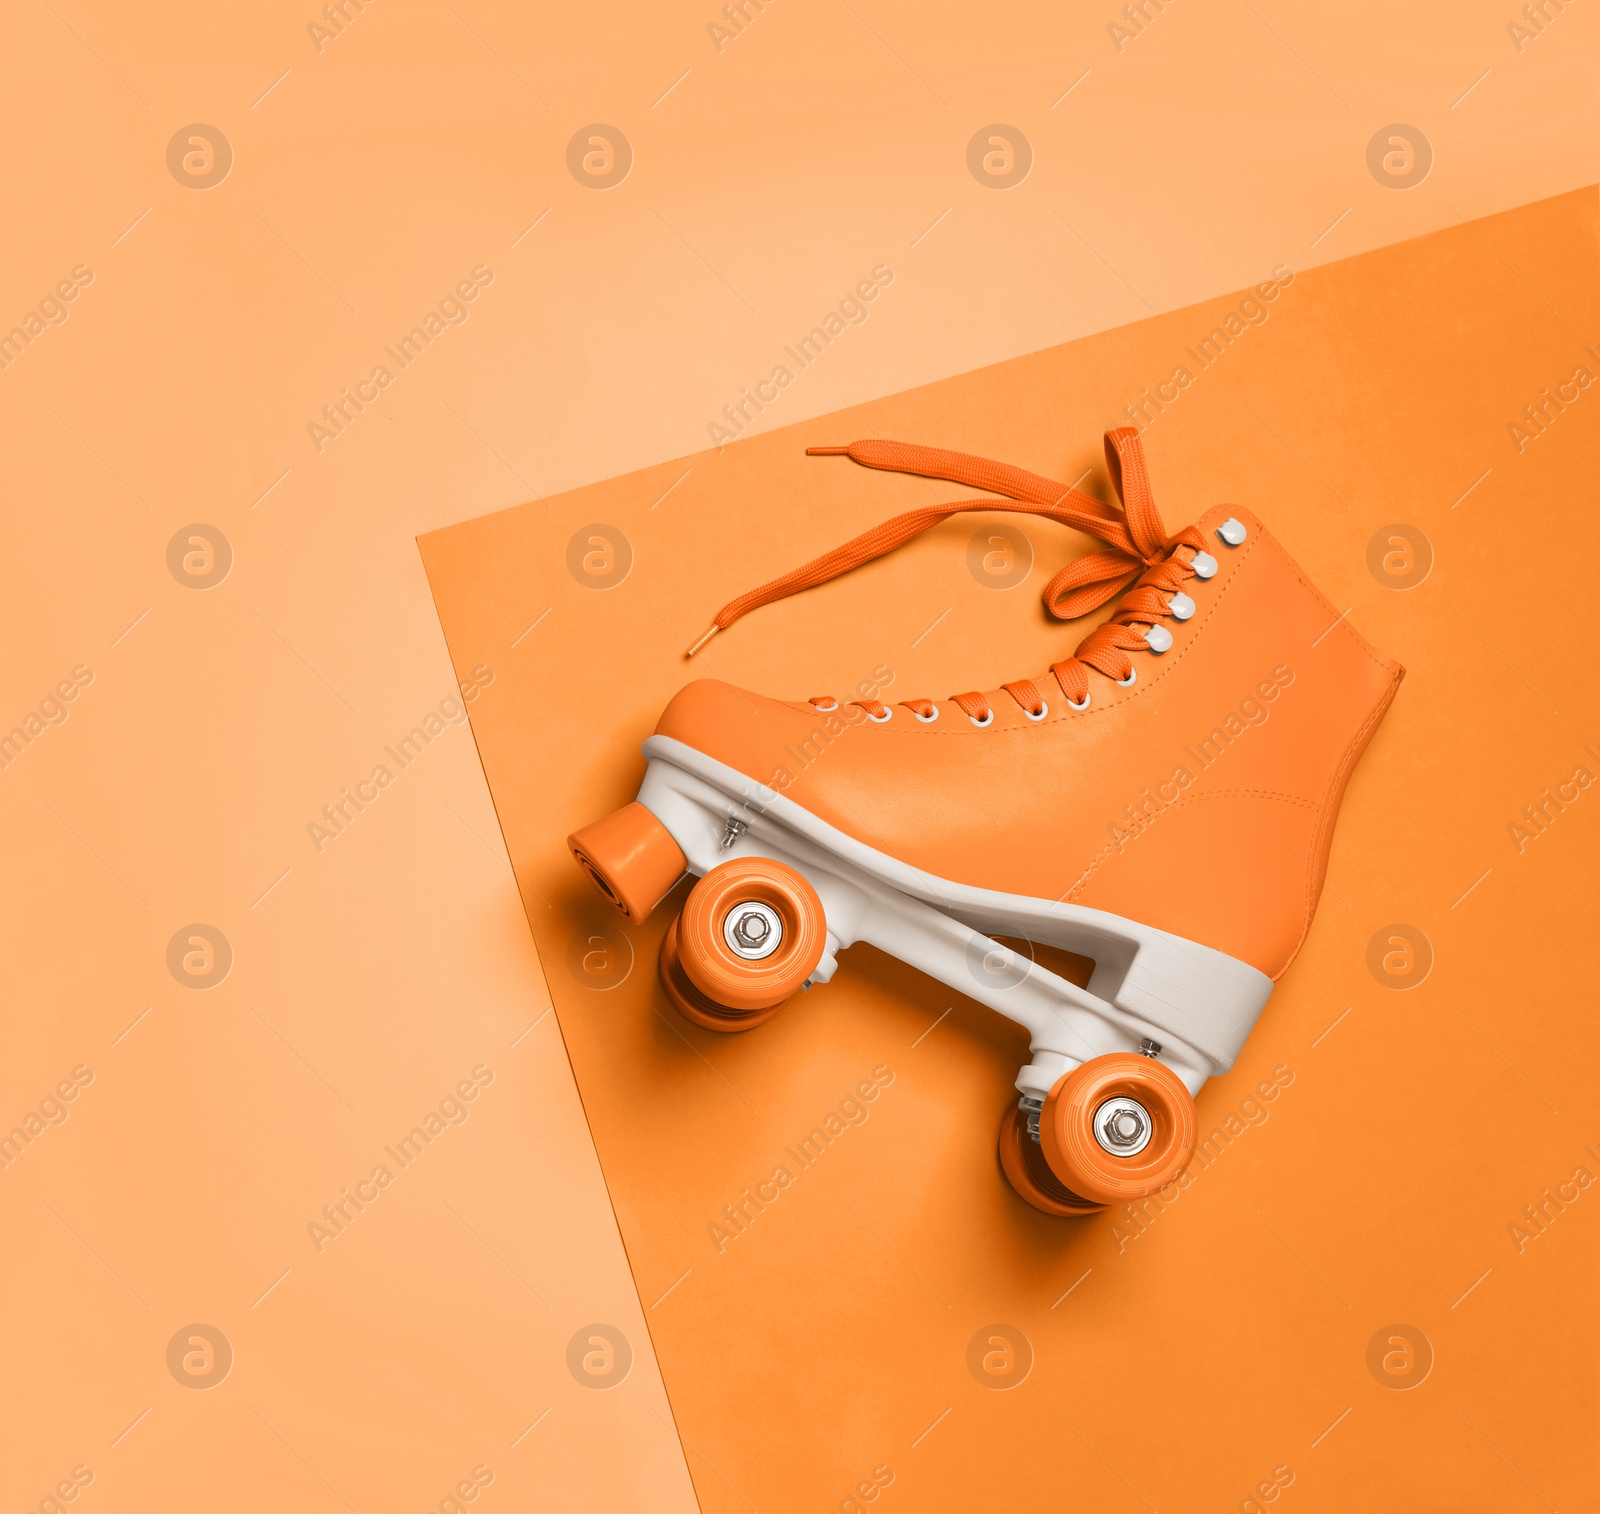 Image of Stylish quad roller skate on orange background, top view